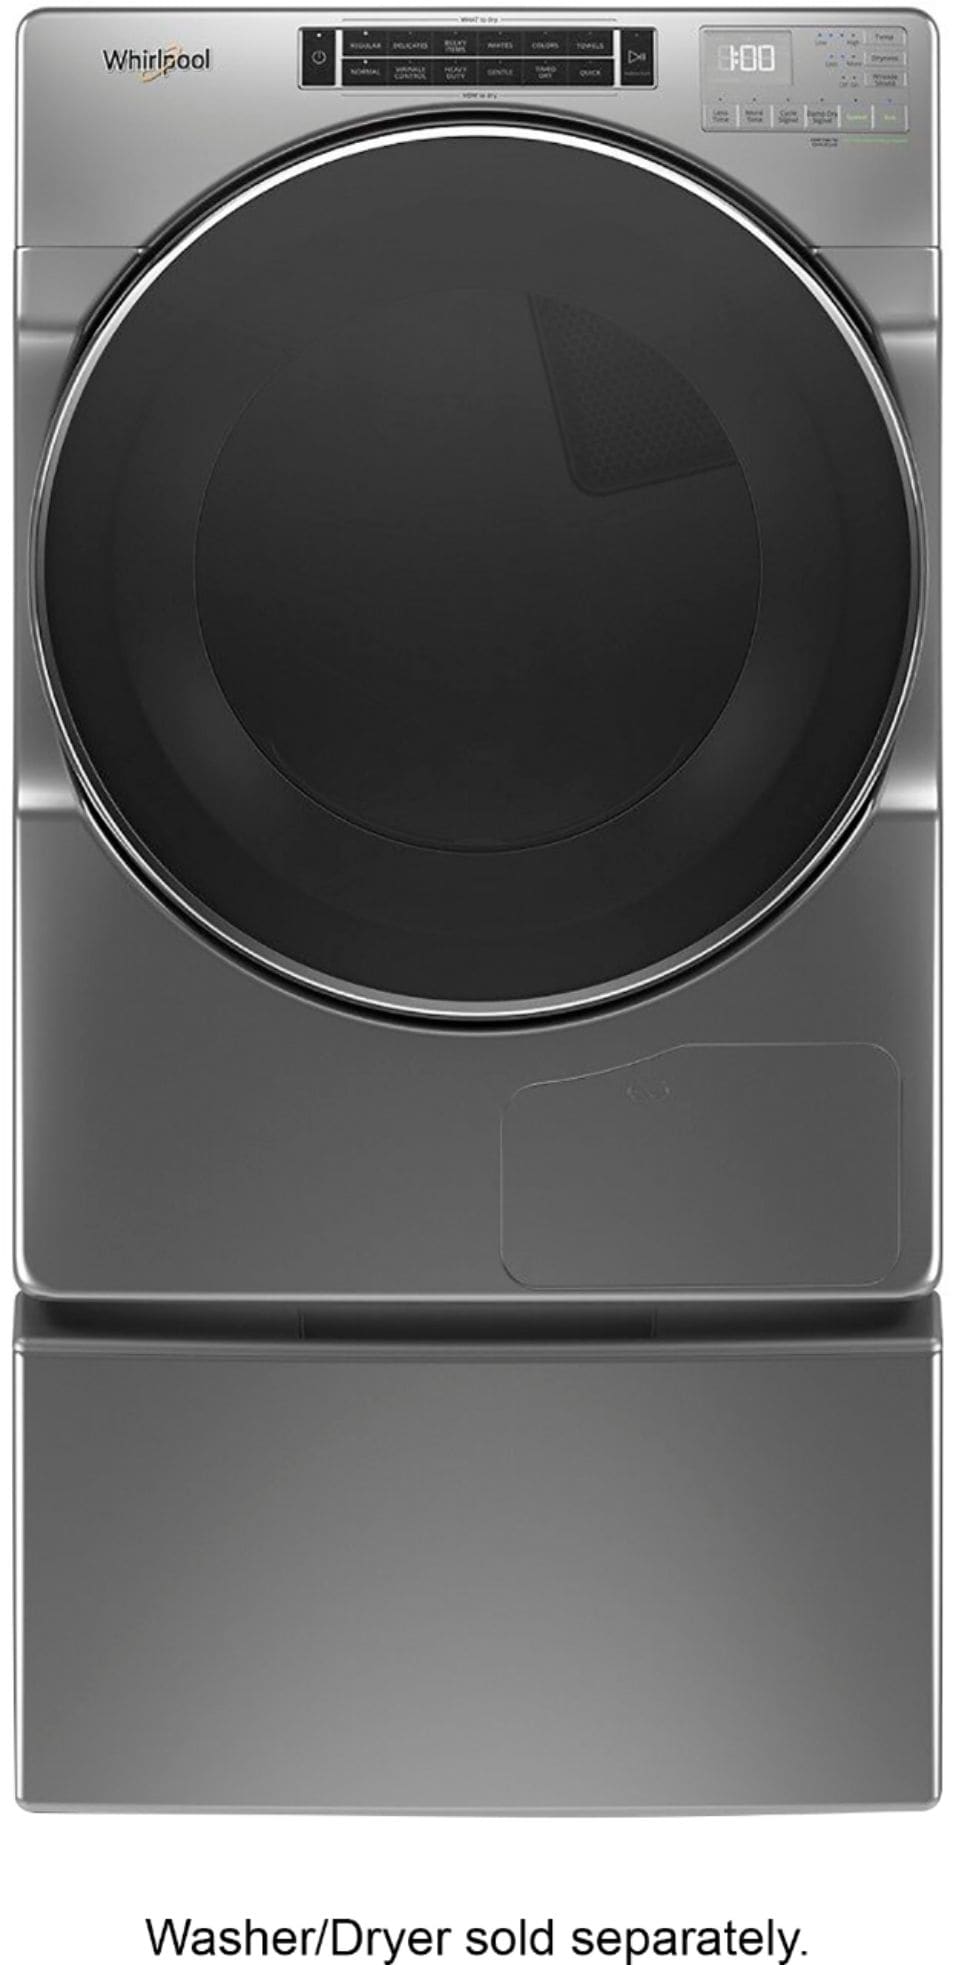 Whirlpool - Washer/Dryer Laundry Pedestal with Storage Drawer - Chrome shadow_3